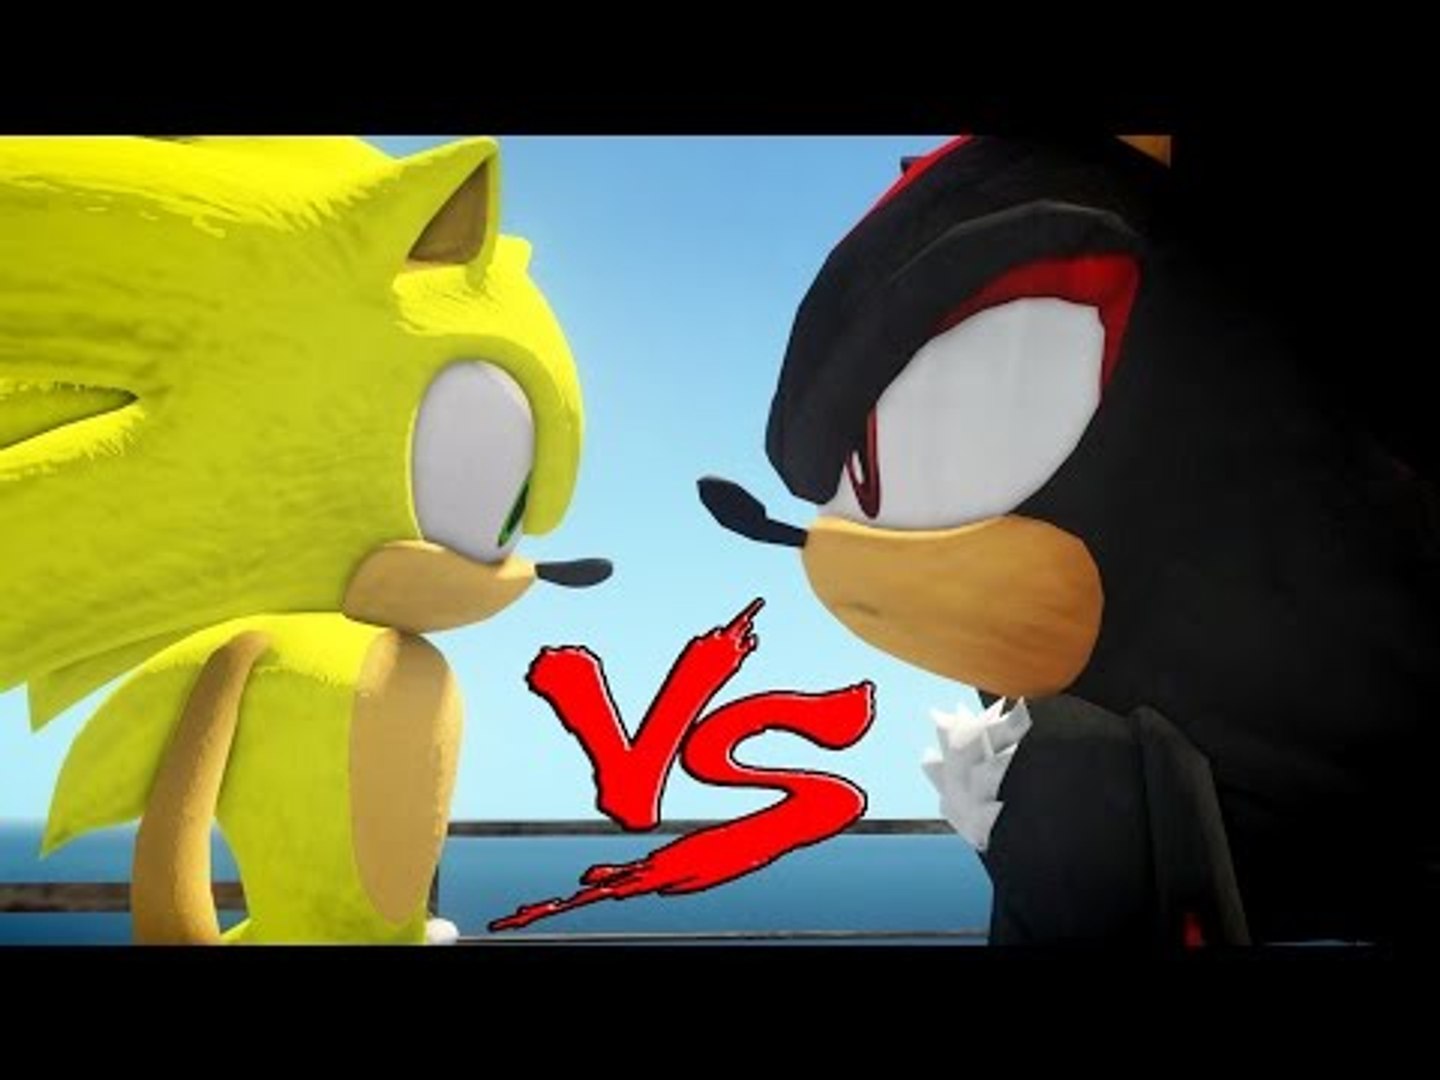 shadow sonic - Google Search  Shadow the hedgehog, Sonic the